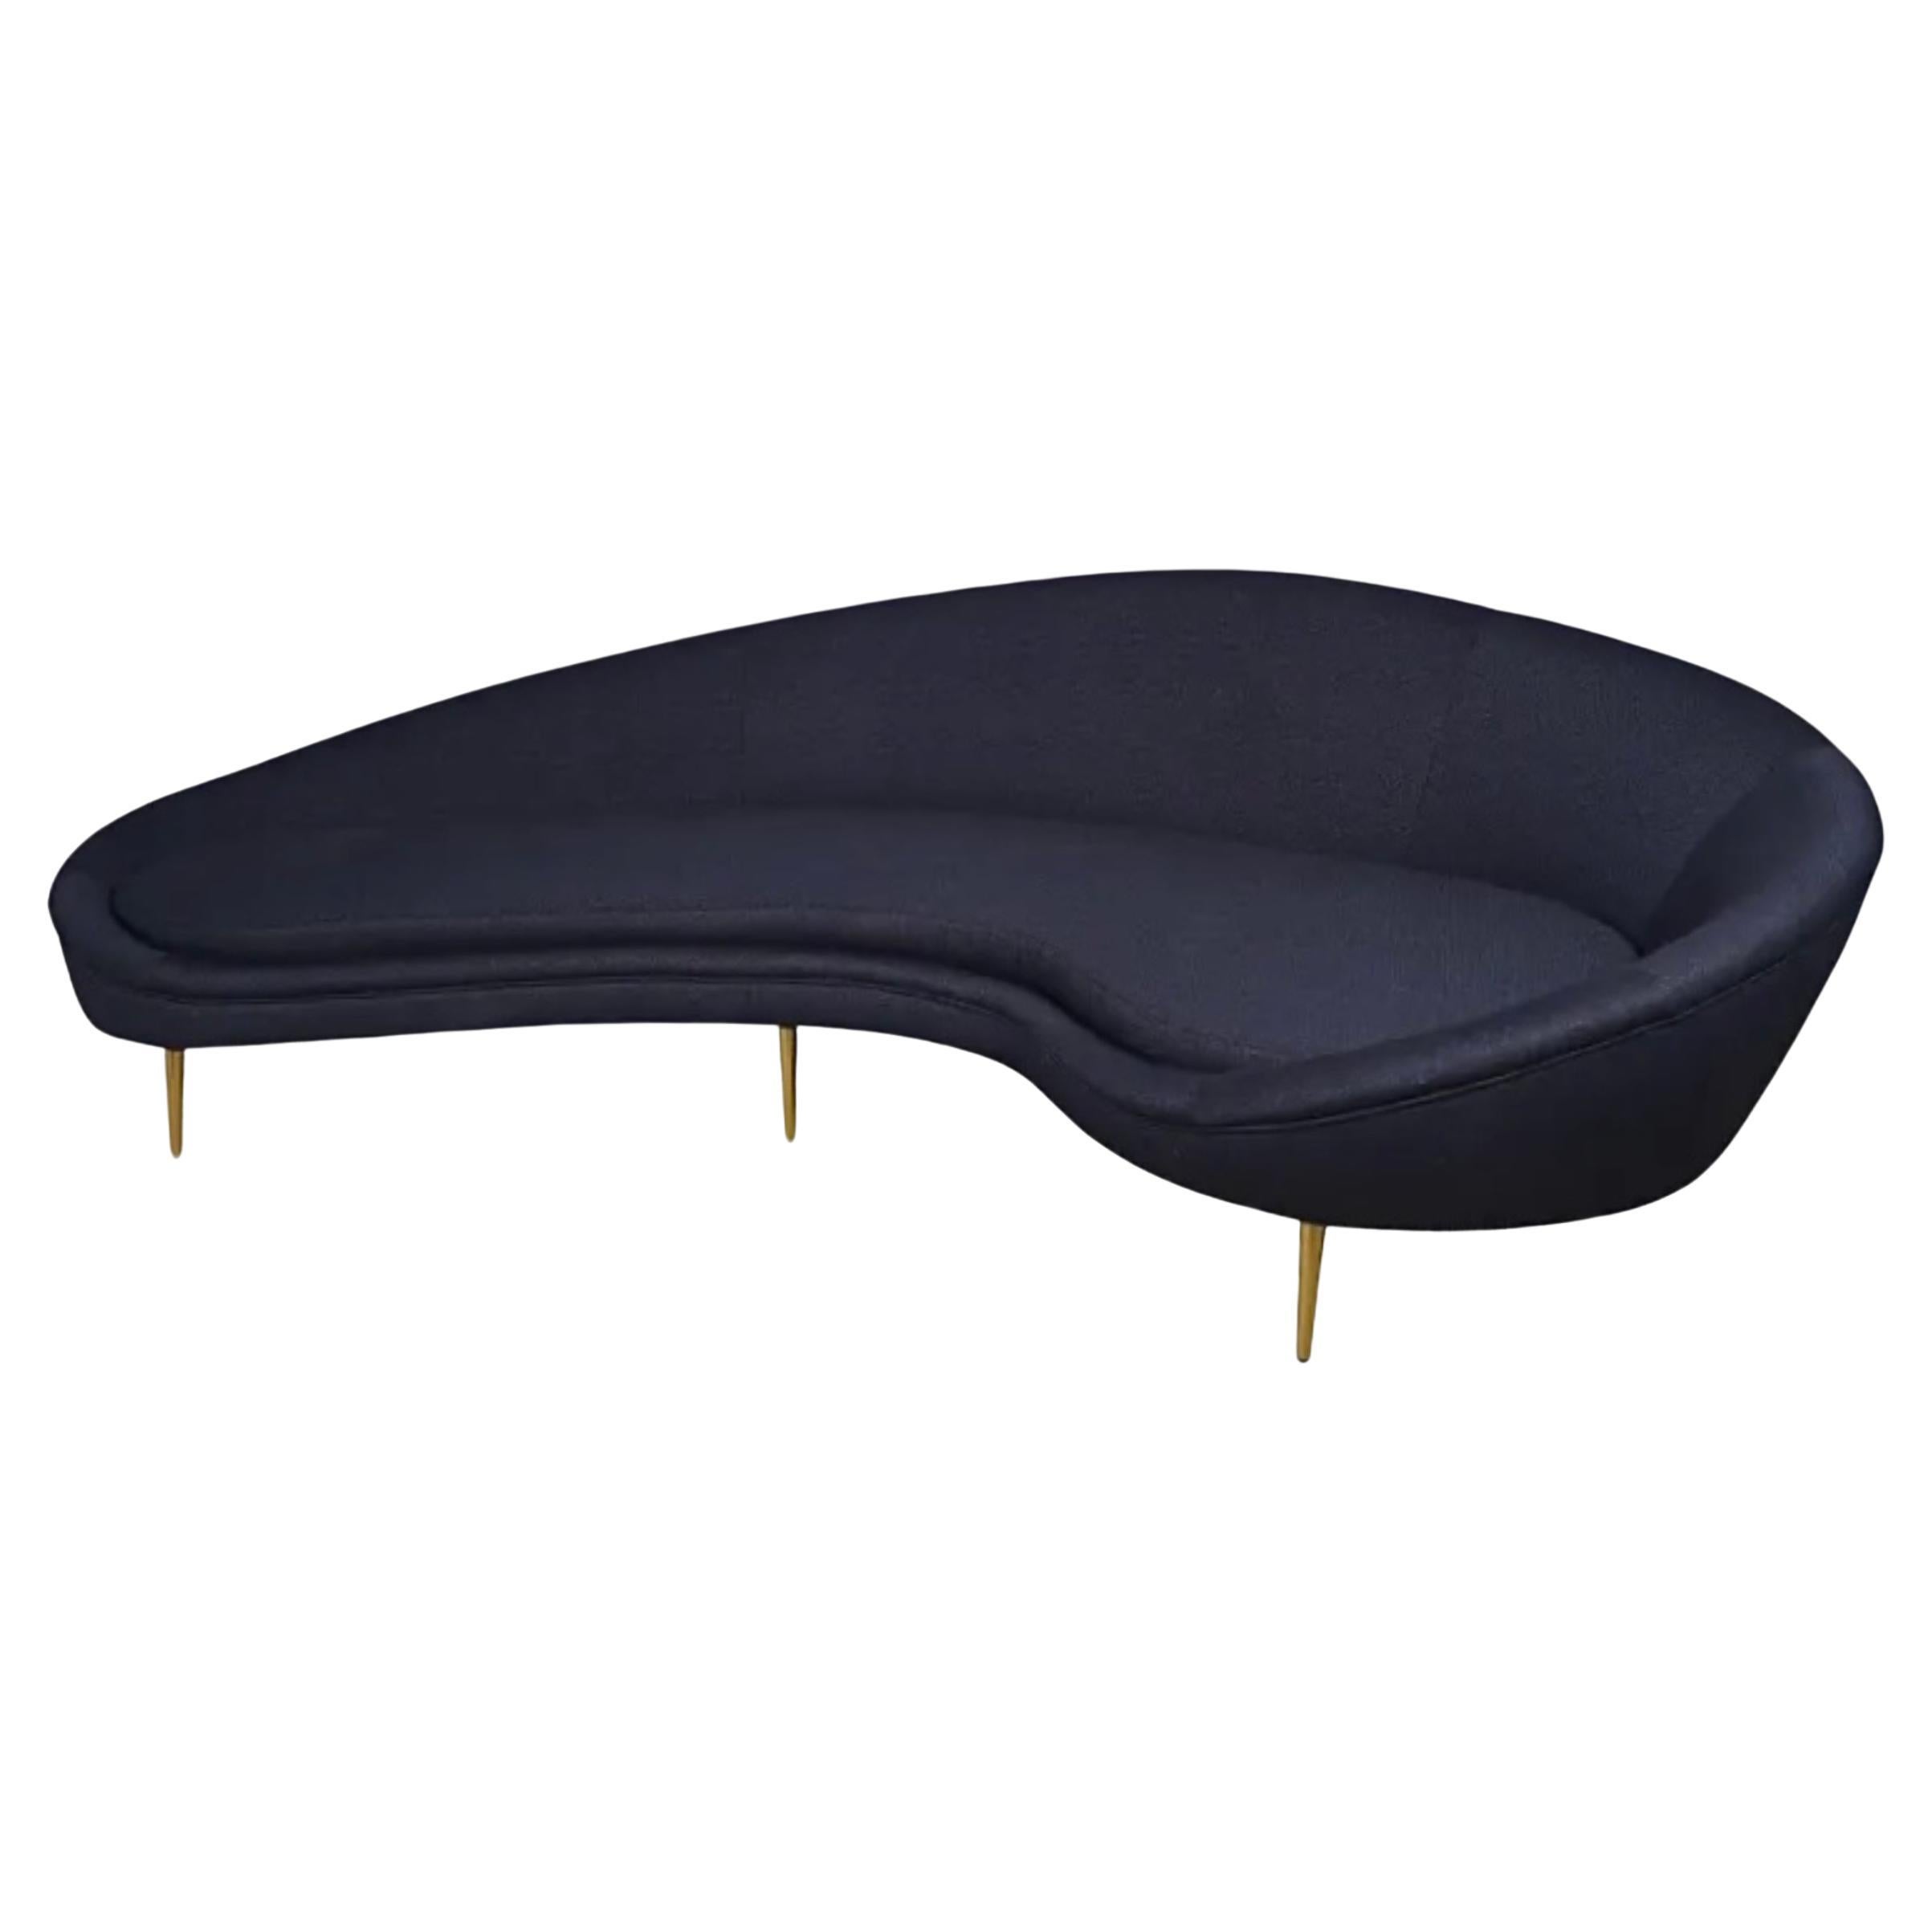 Ico Parisi Style Freeform Sofa For Sale